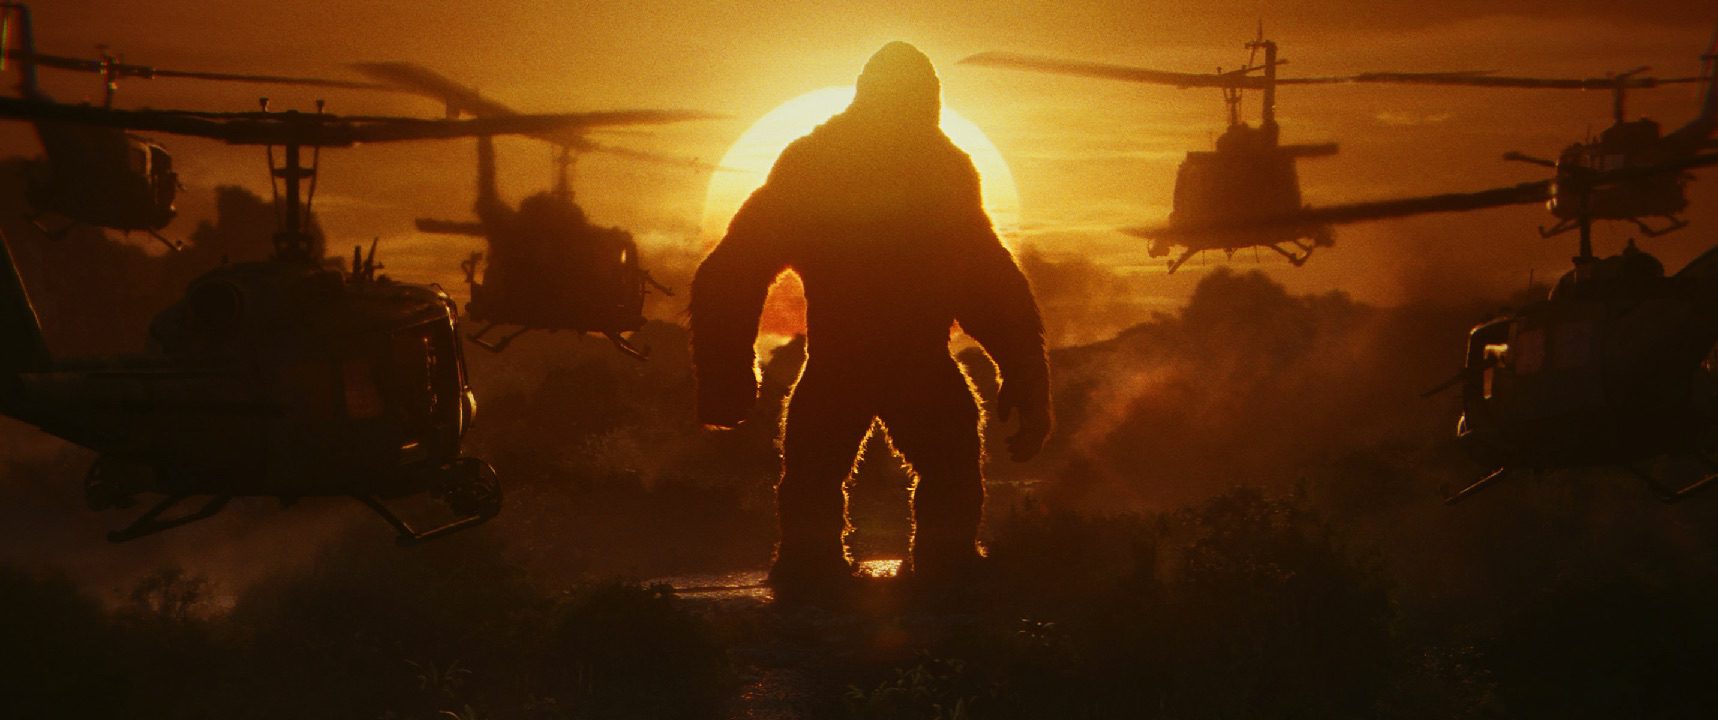 Kong: Skull Island (Warner Bros Pictures)